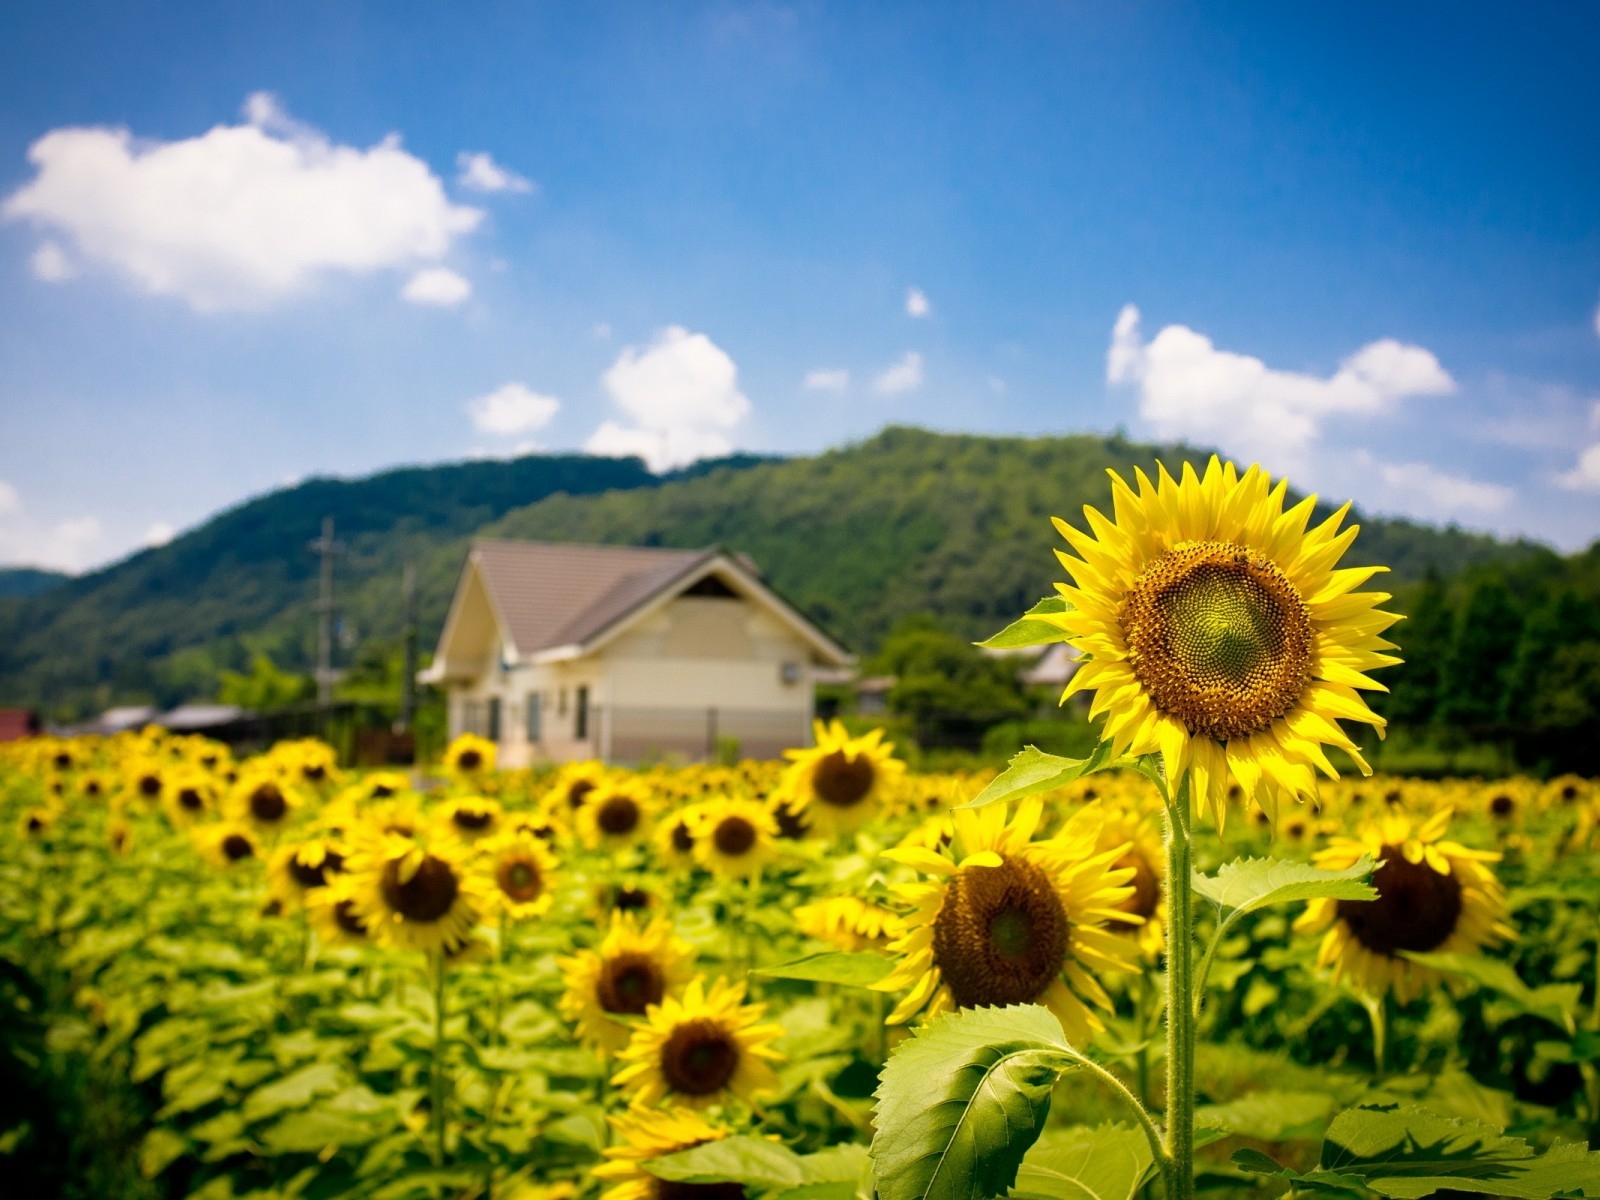 Sunflower Land for 1600 x 1200 resolution